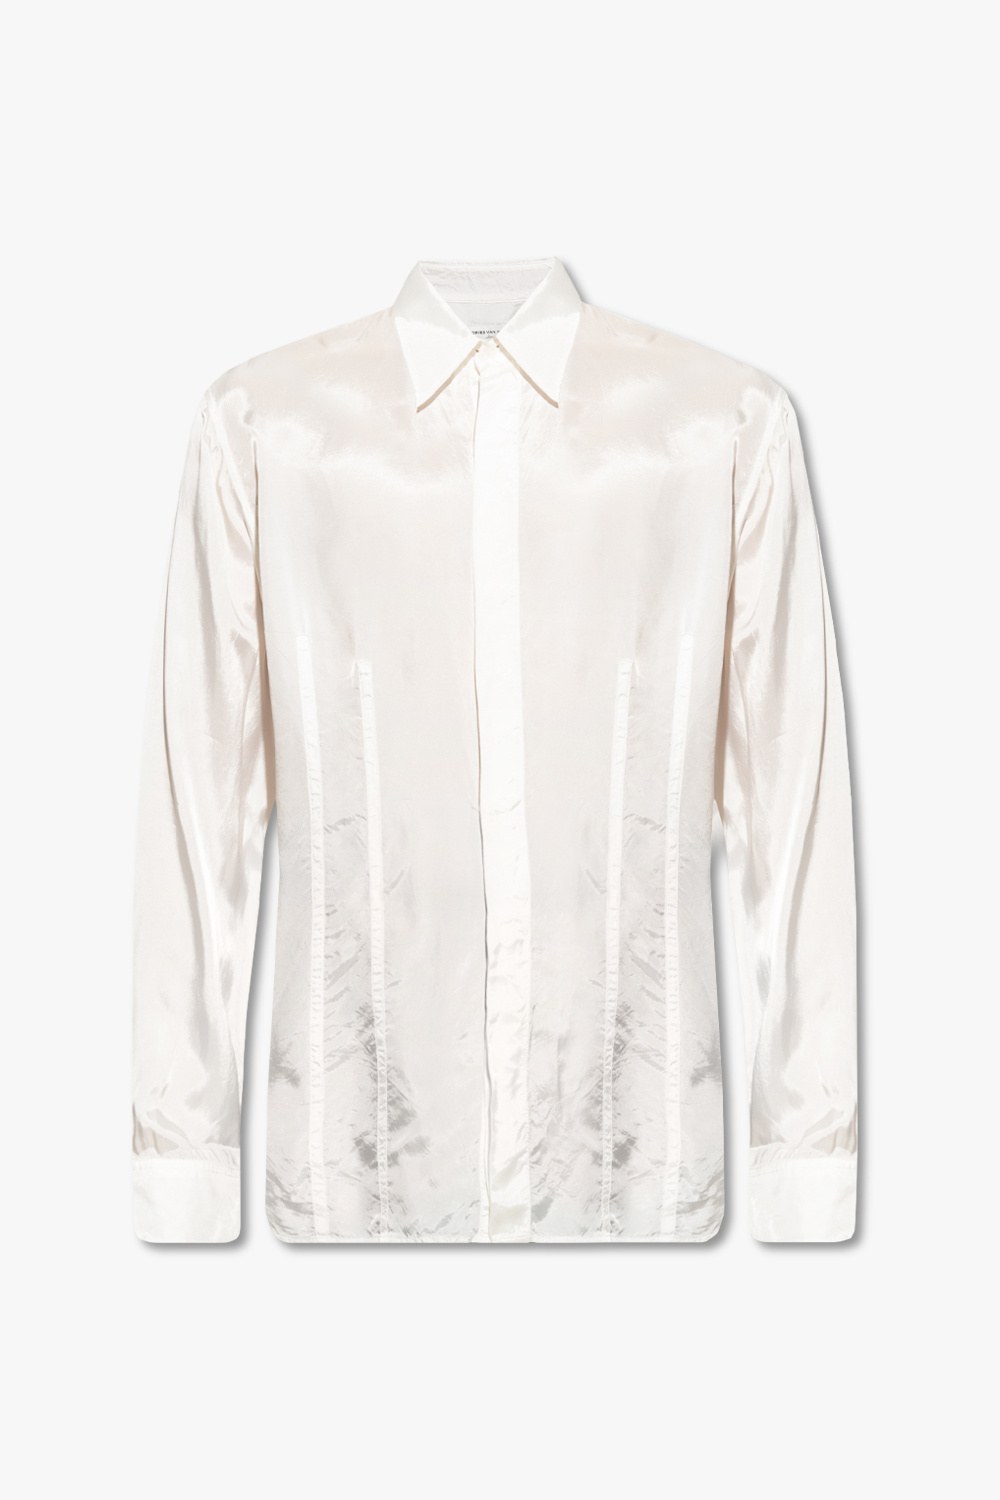 Dries Van Noten T-shirt shirt with stitching details